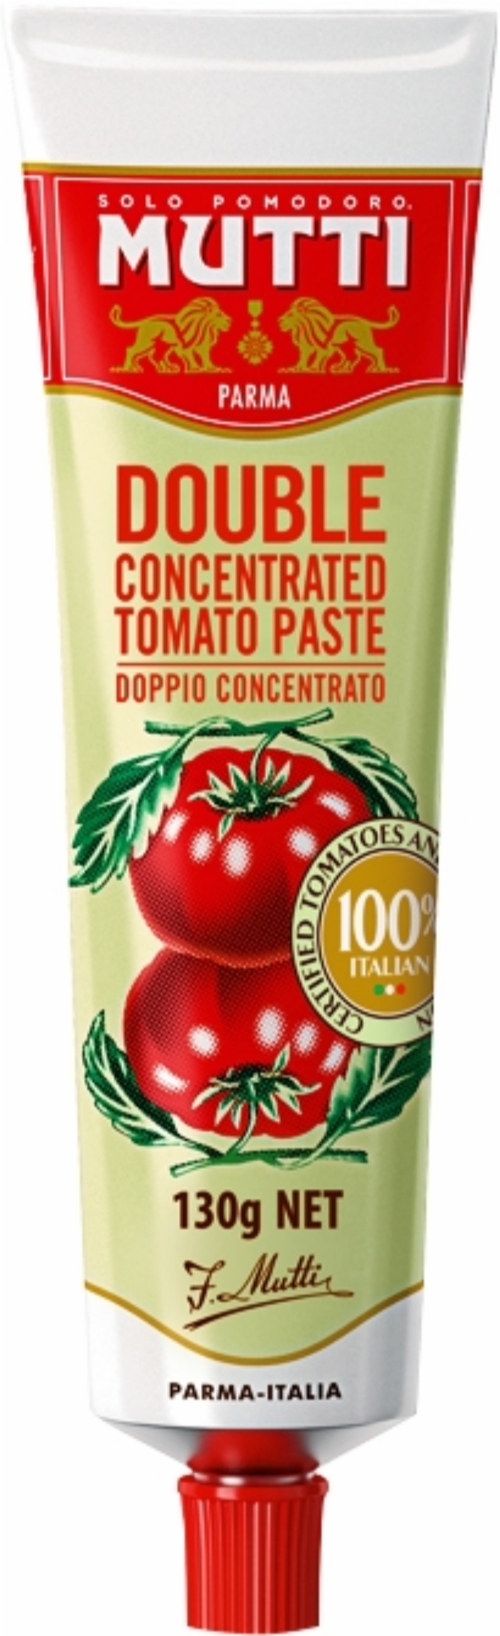 MUTTI Tomato Puree 130g